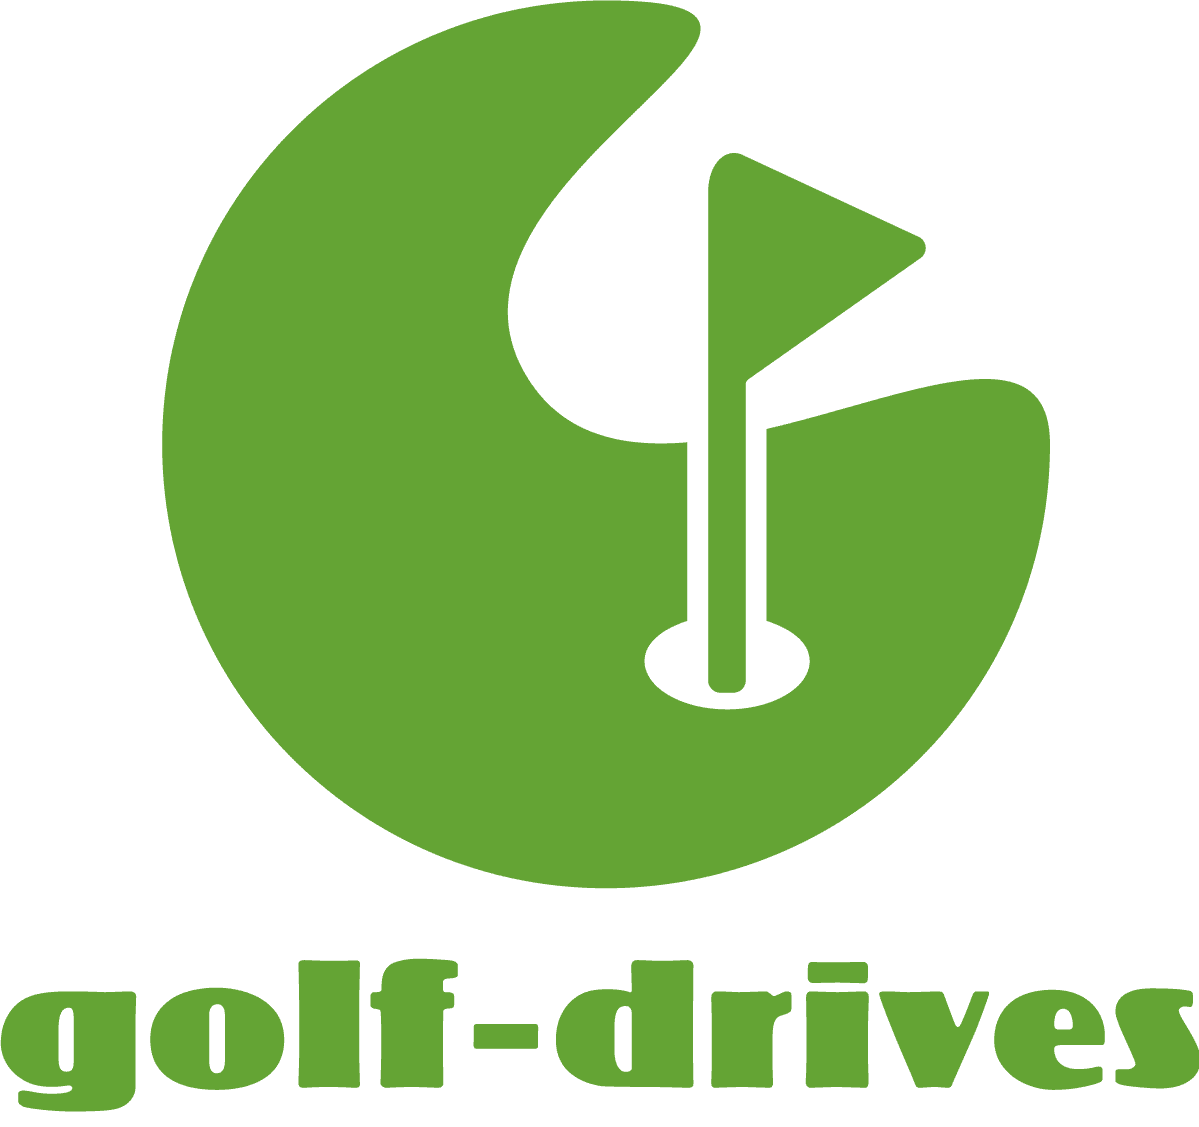 Golf-Drives Logo